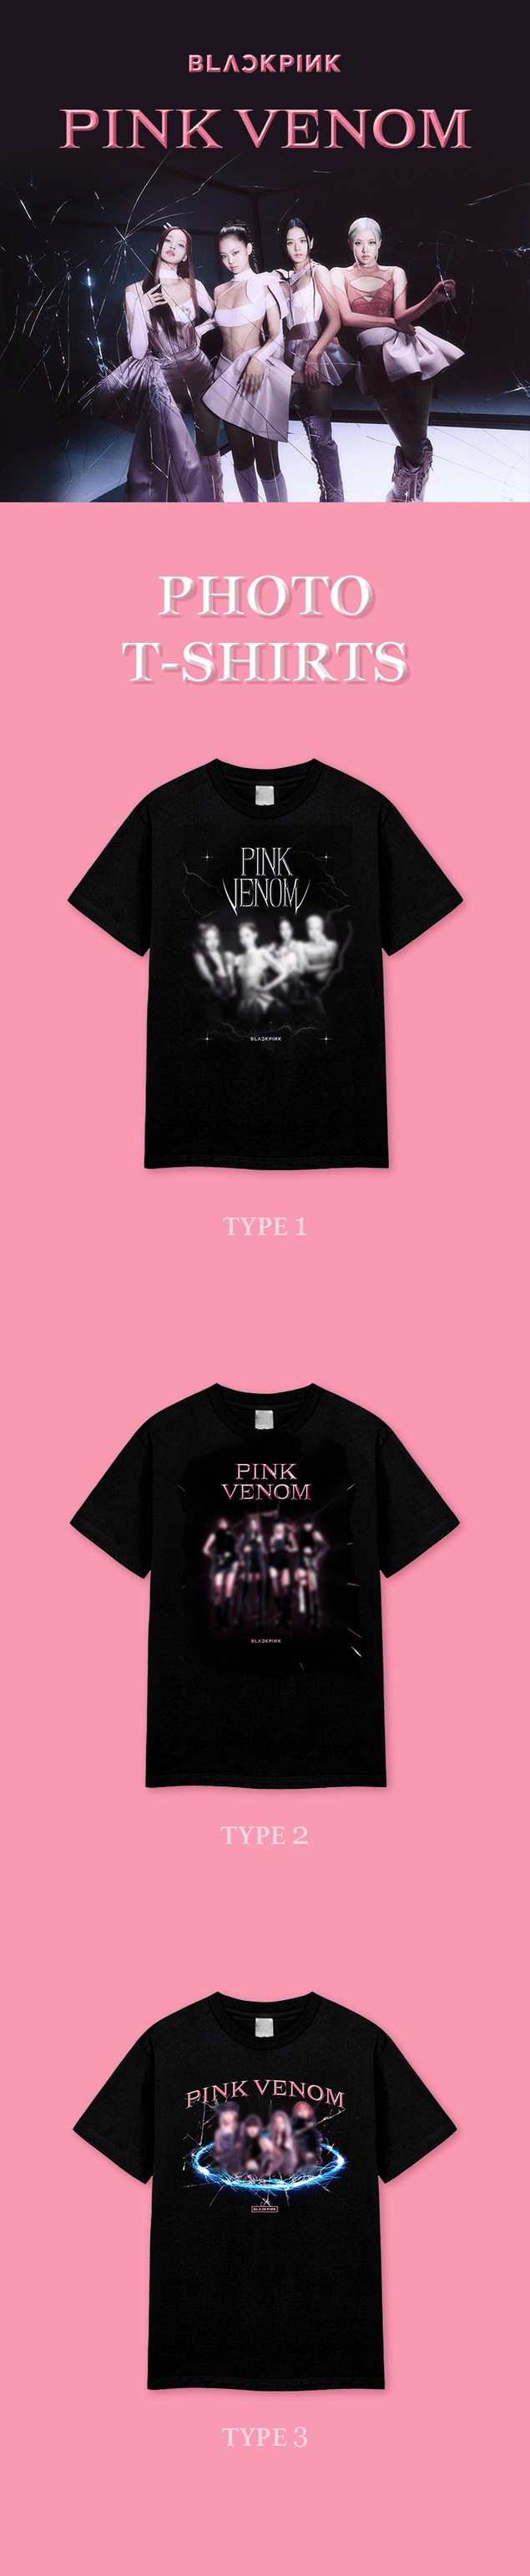 Blackpink [Pink Venom] Foto camisetas